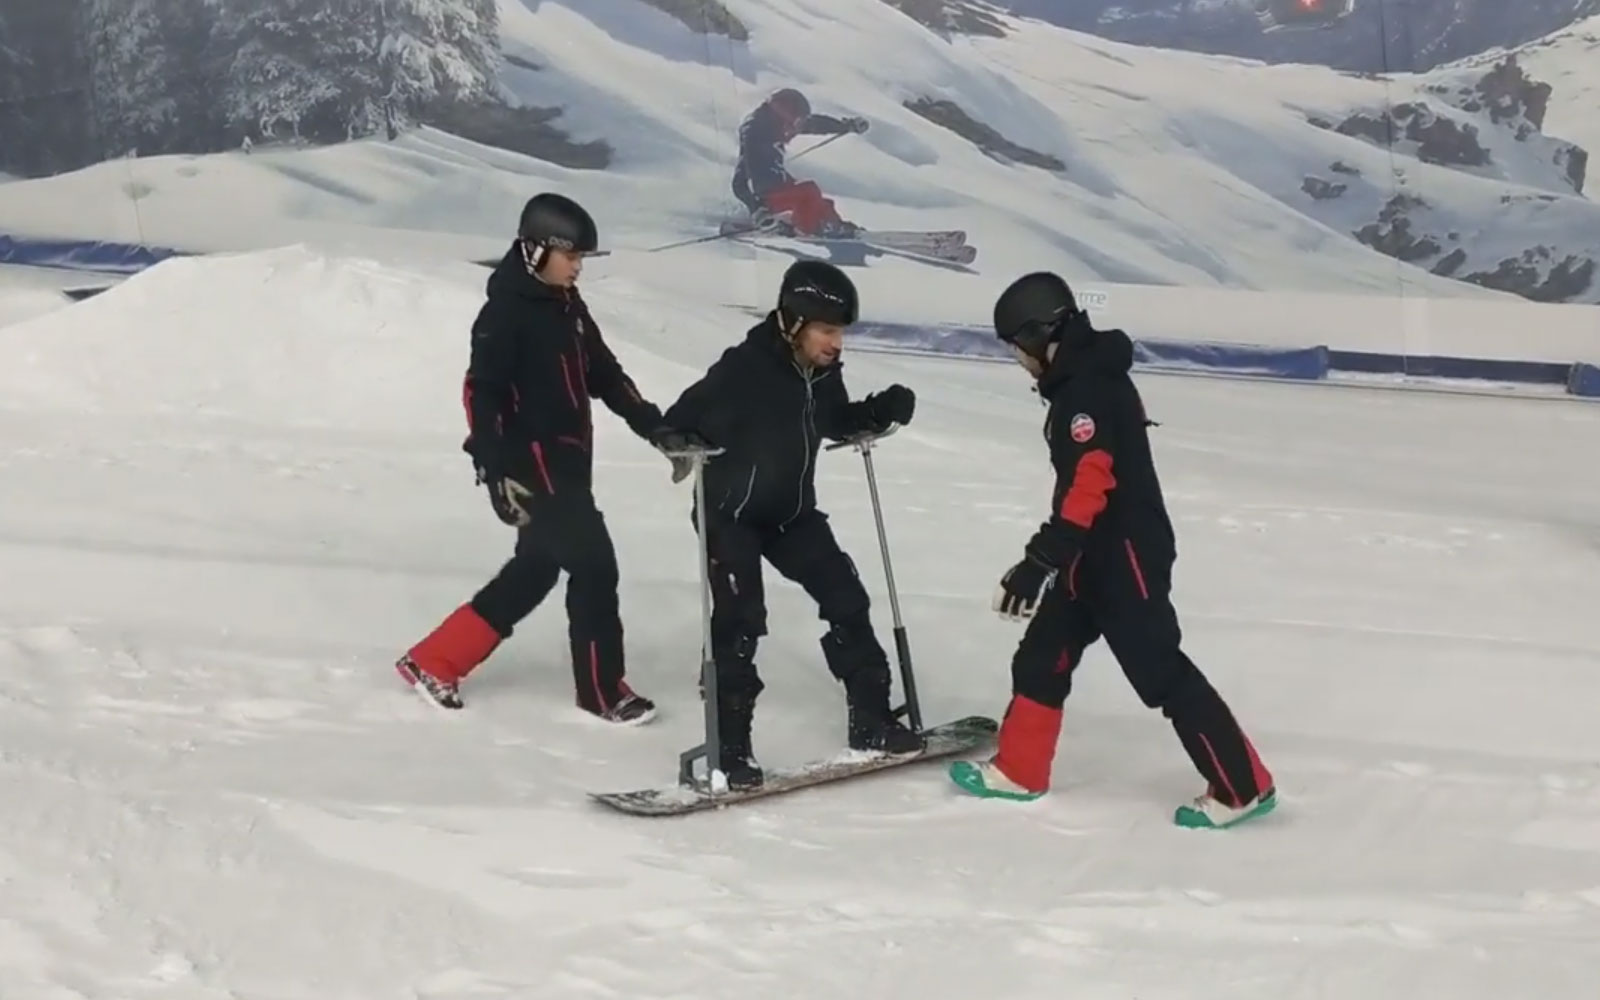 Graham snowboarding